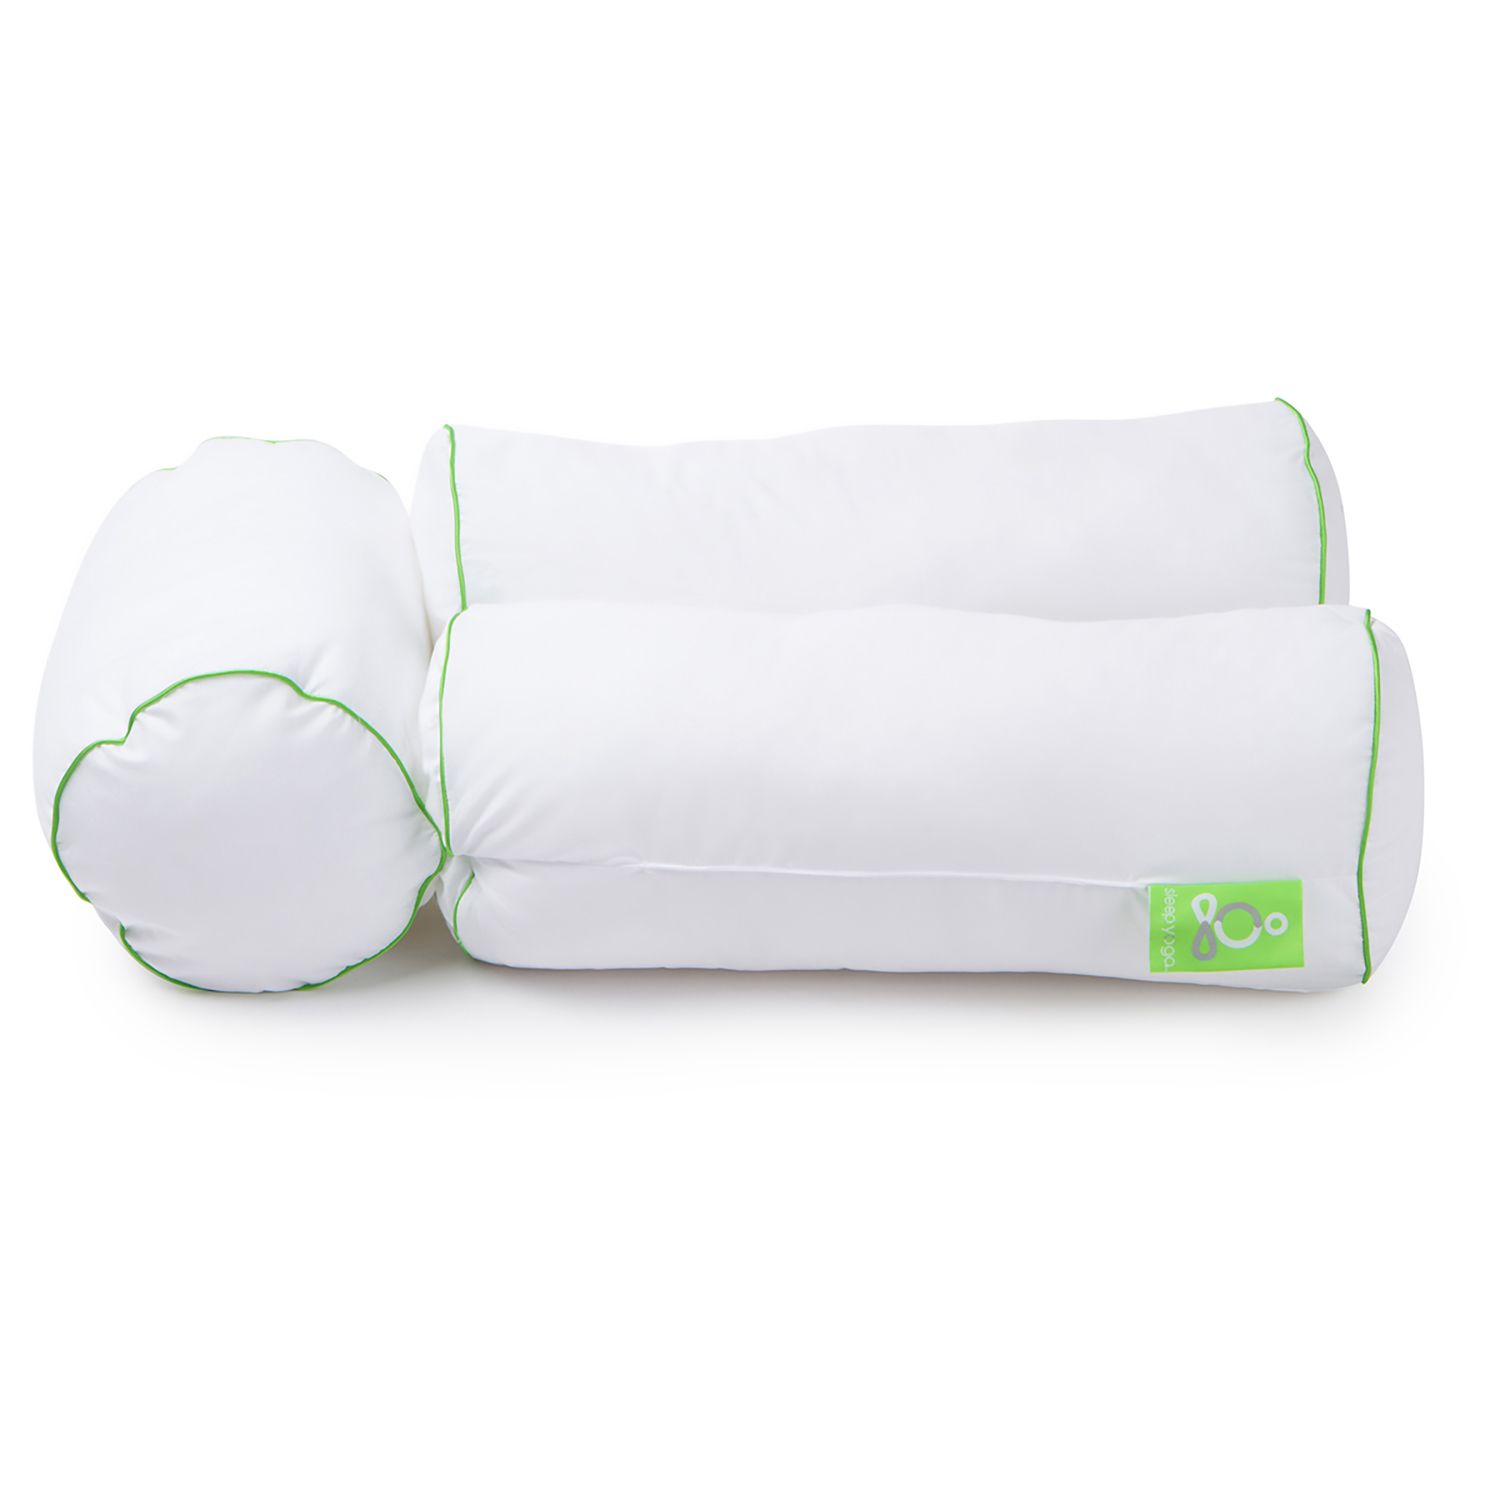 sleep yoga side sleeper arm rest pillow